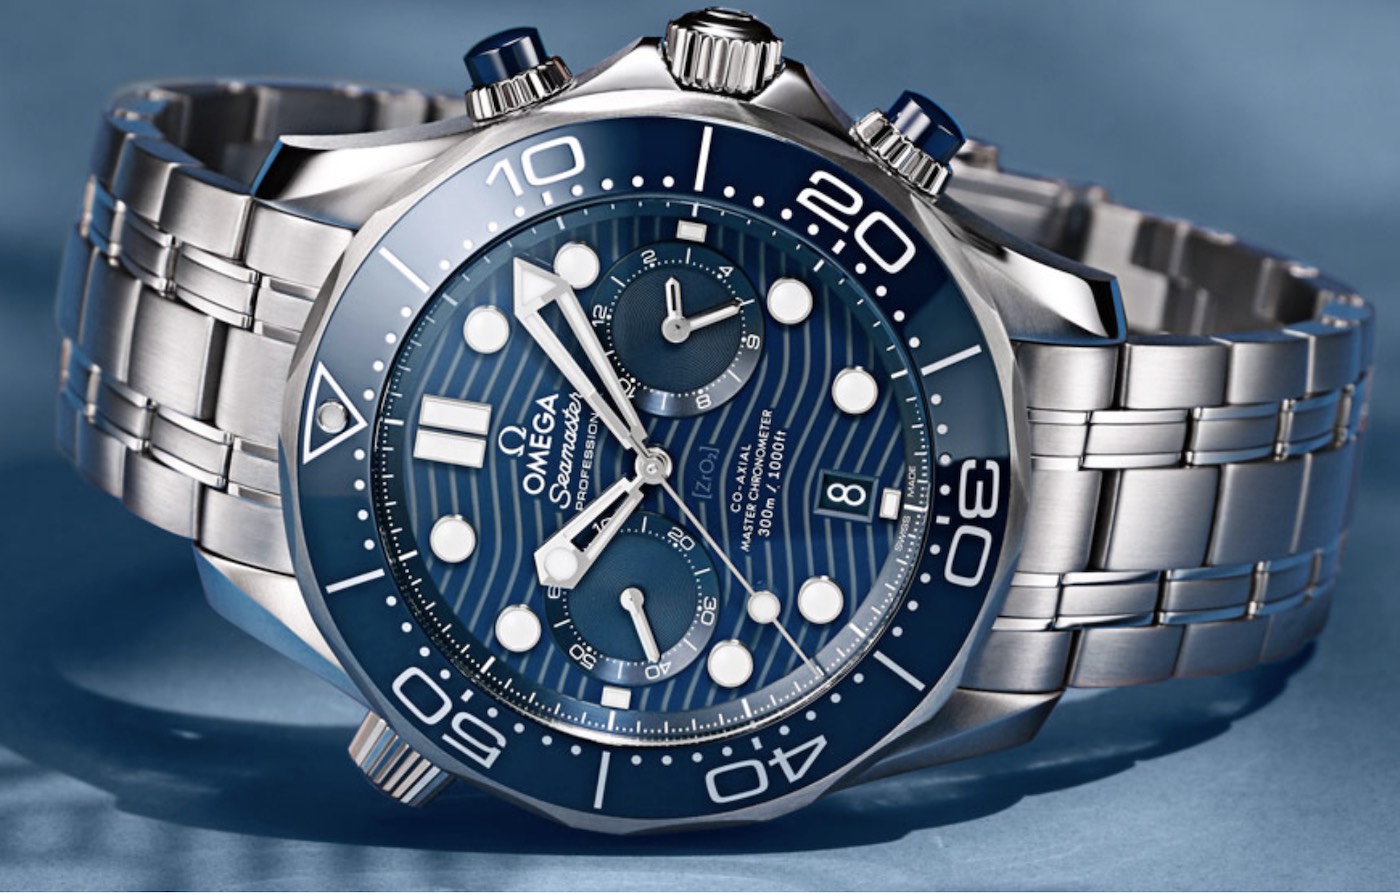 omega seamaster diver 300m master chronometer review